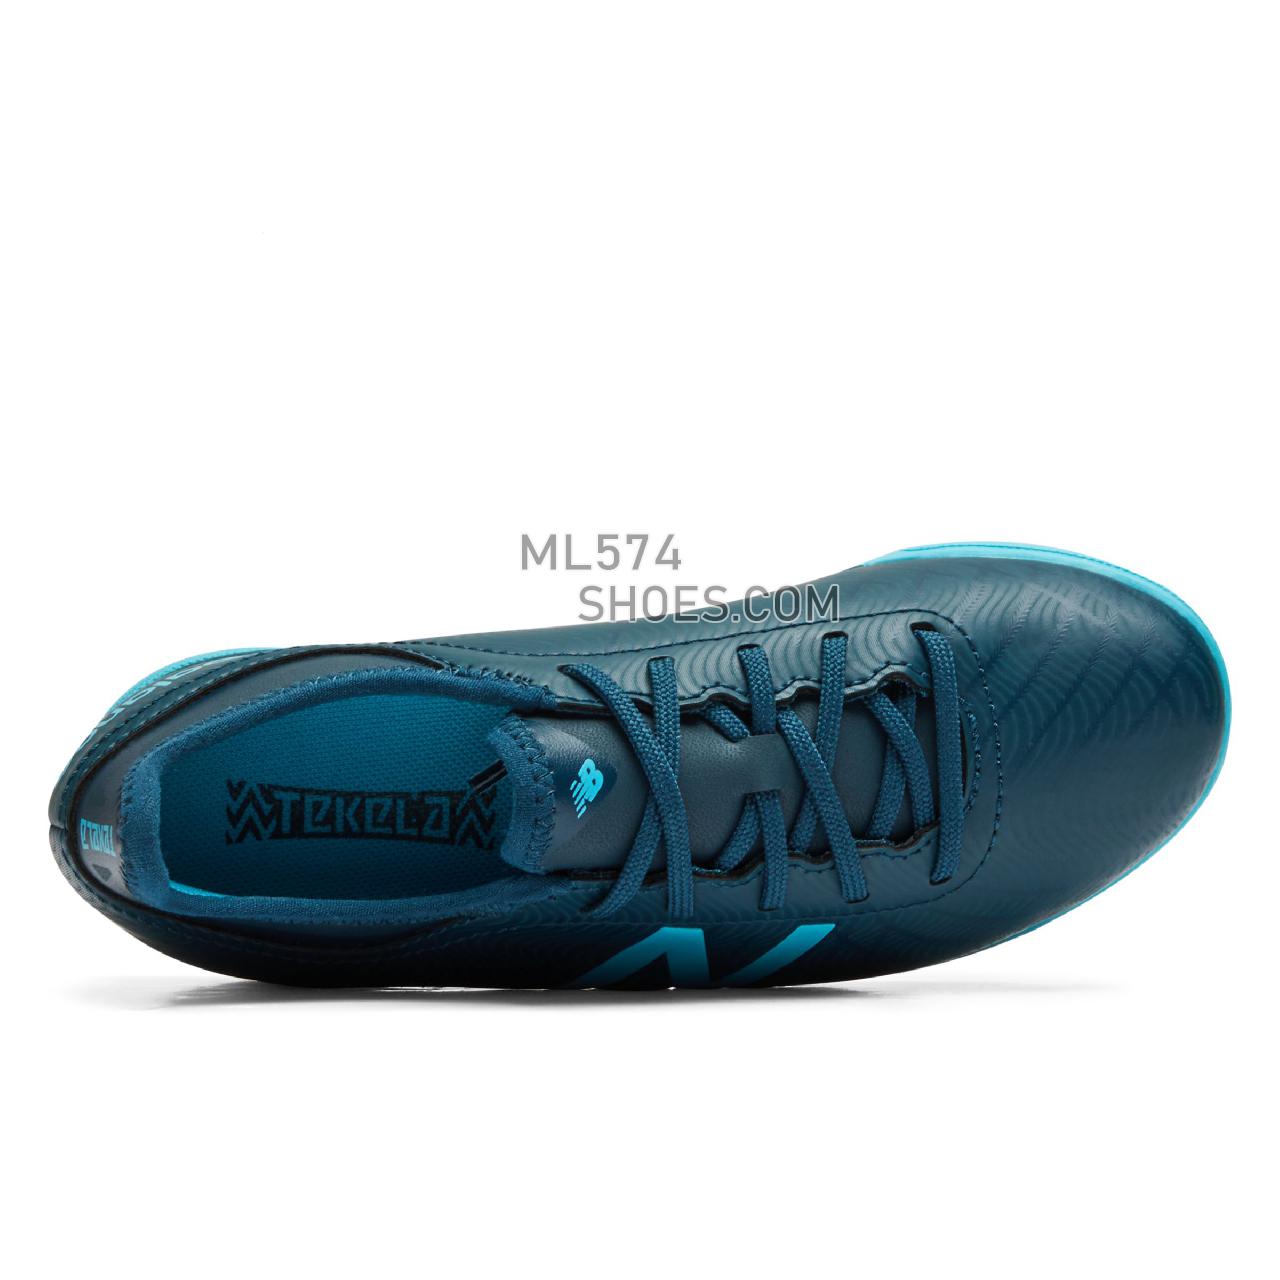 New Balance JSTTIV2 - Unisex Men's Women's Indoor FootBall Boots - Supercell with Bayside - JSTTISB2